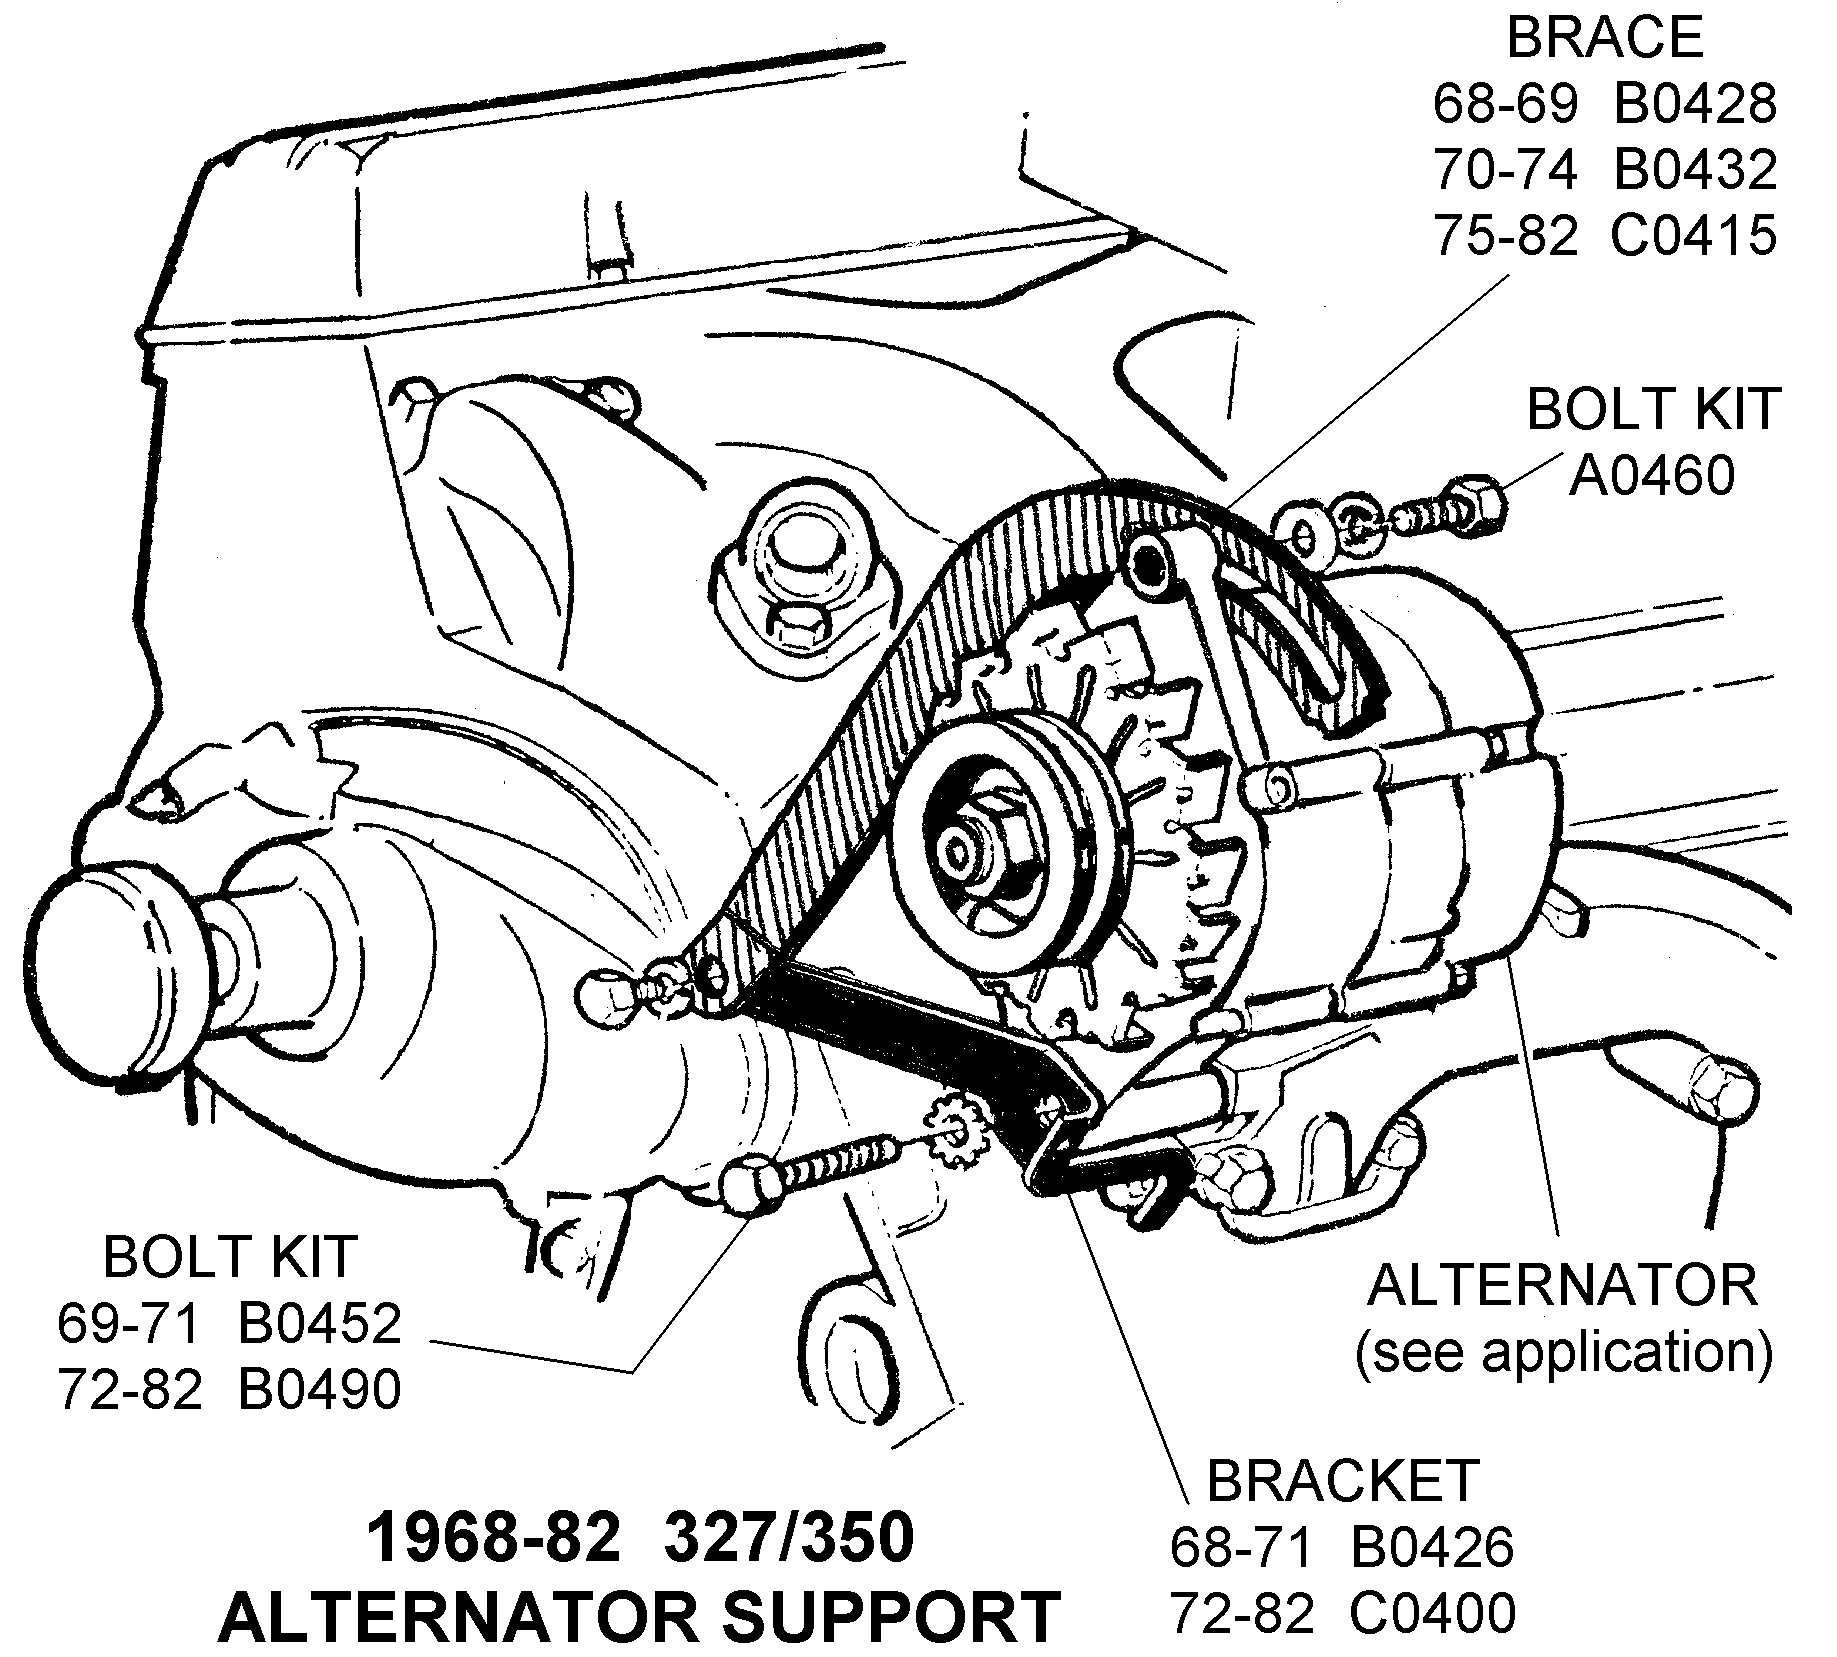 1968-82 327/350 Alternator Support - Diagram View - Chicago Corvette Supply